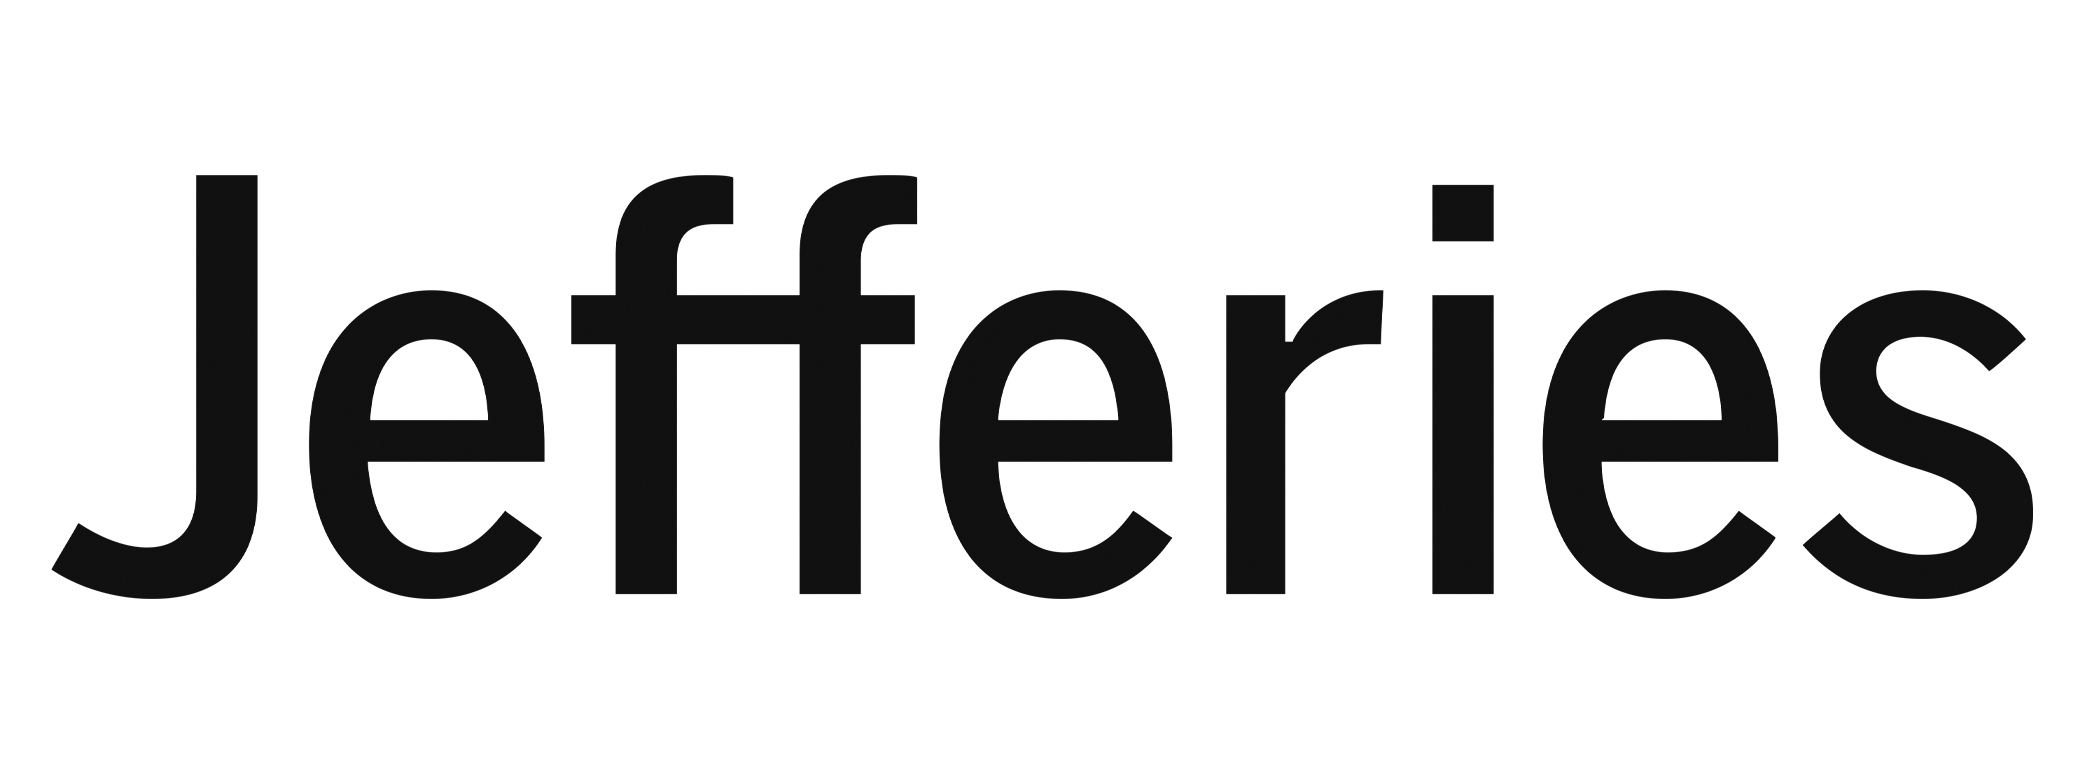 Jefferies logo